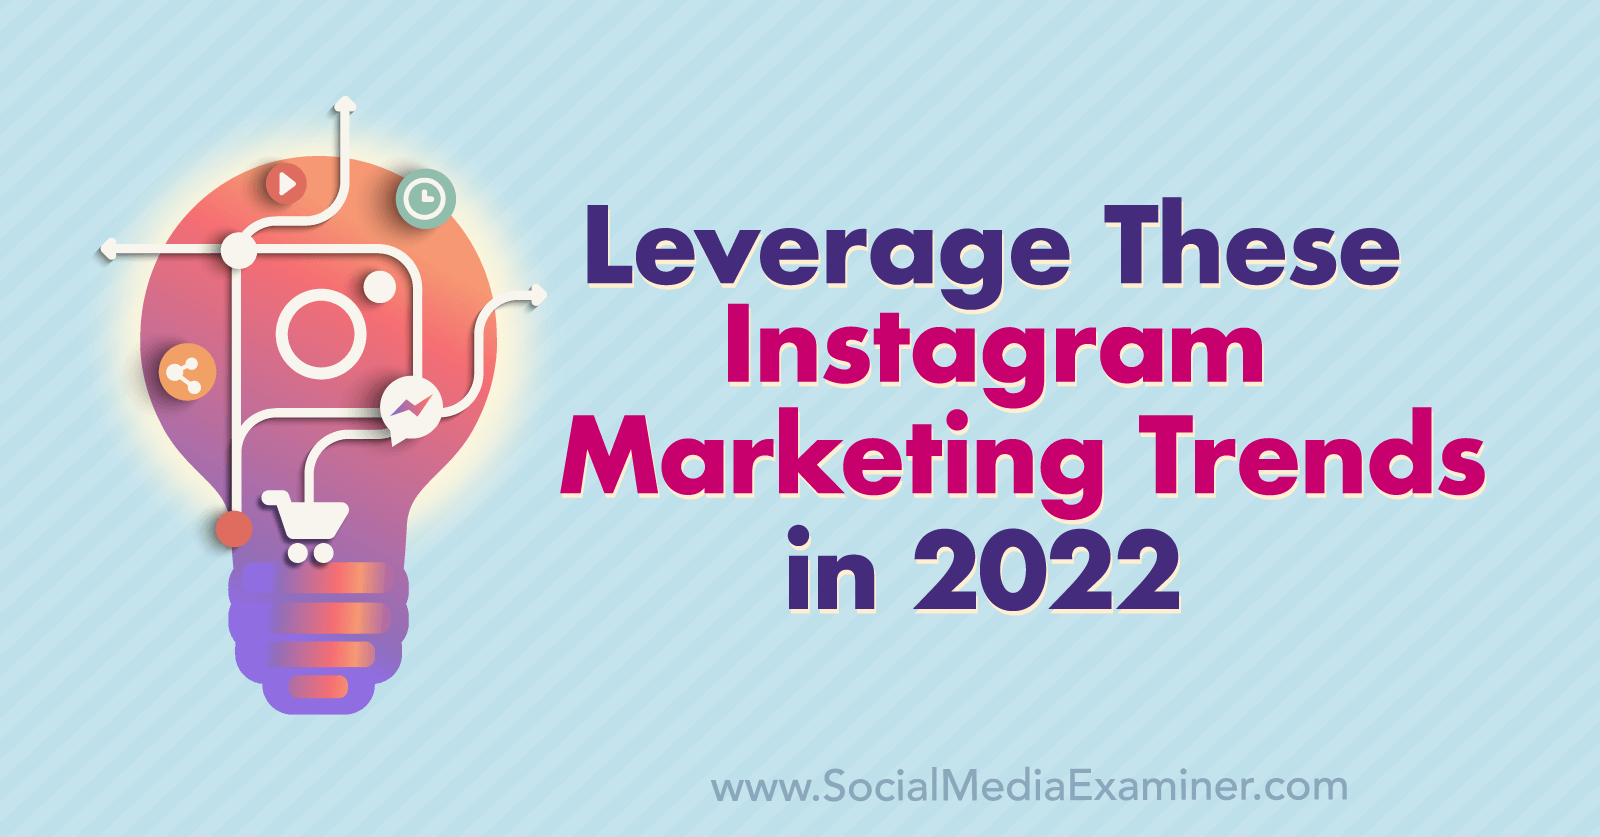 Leverage These Instagram Marketing Trends in 2022 by Anna Sonnenberg